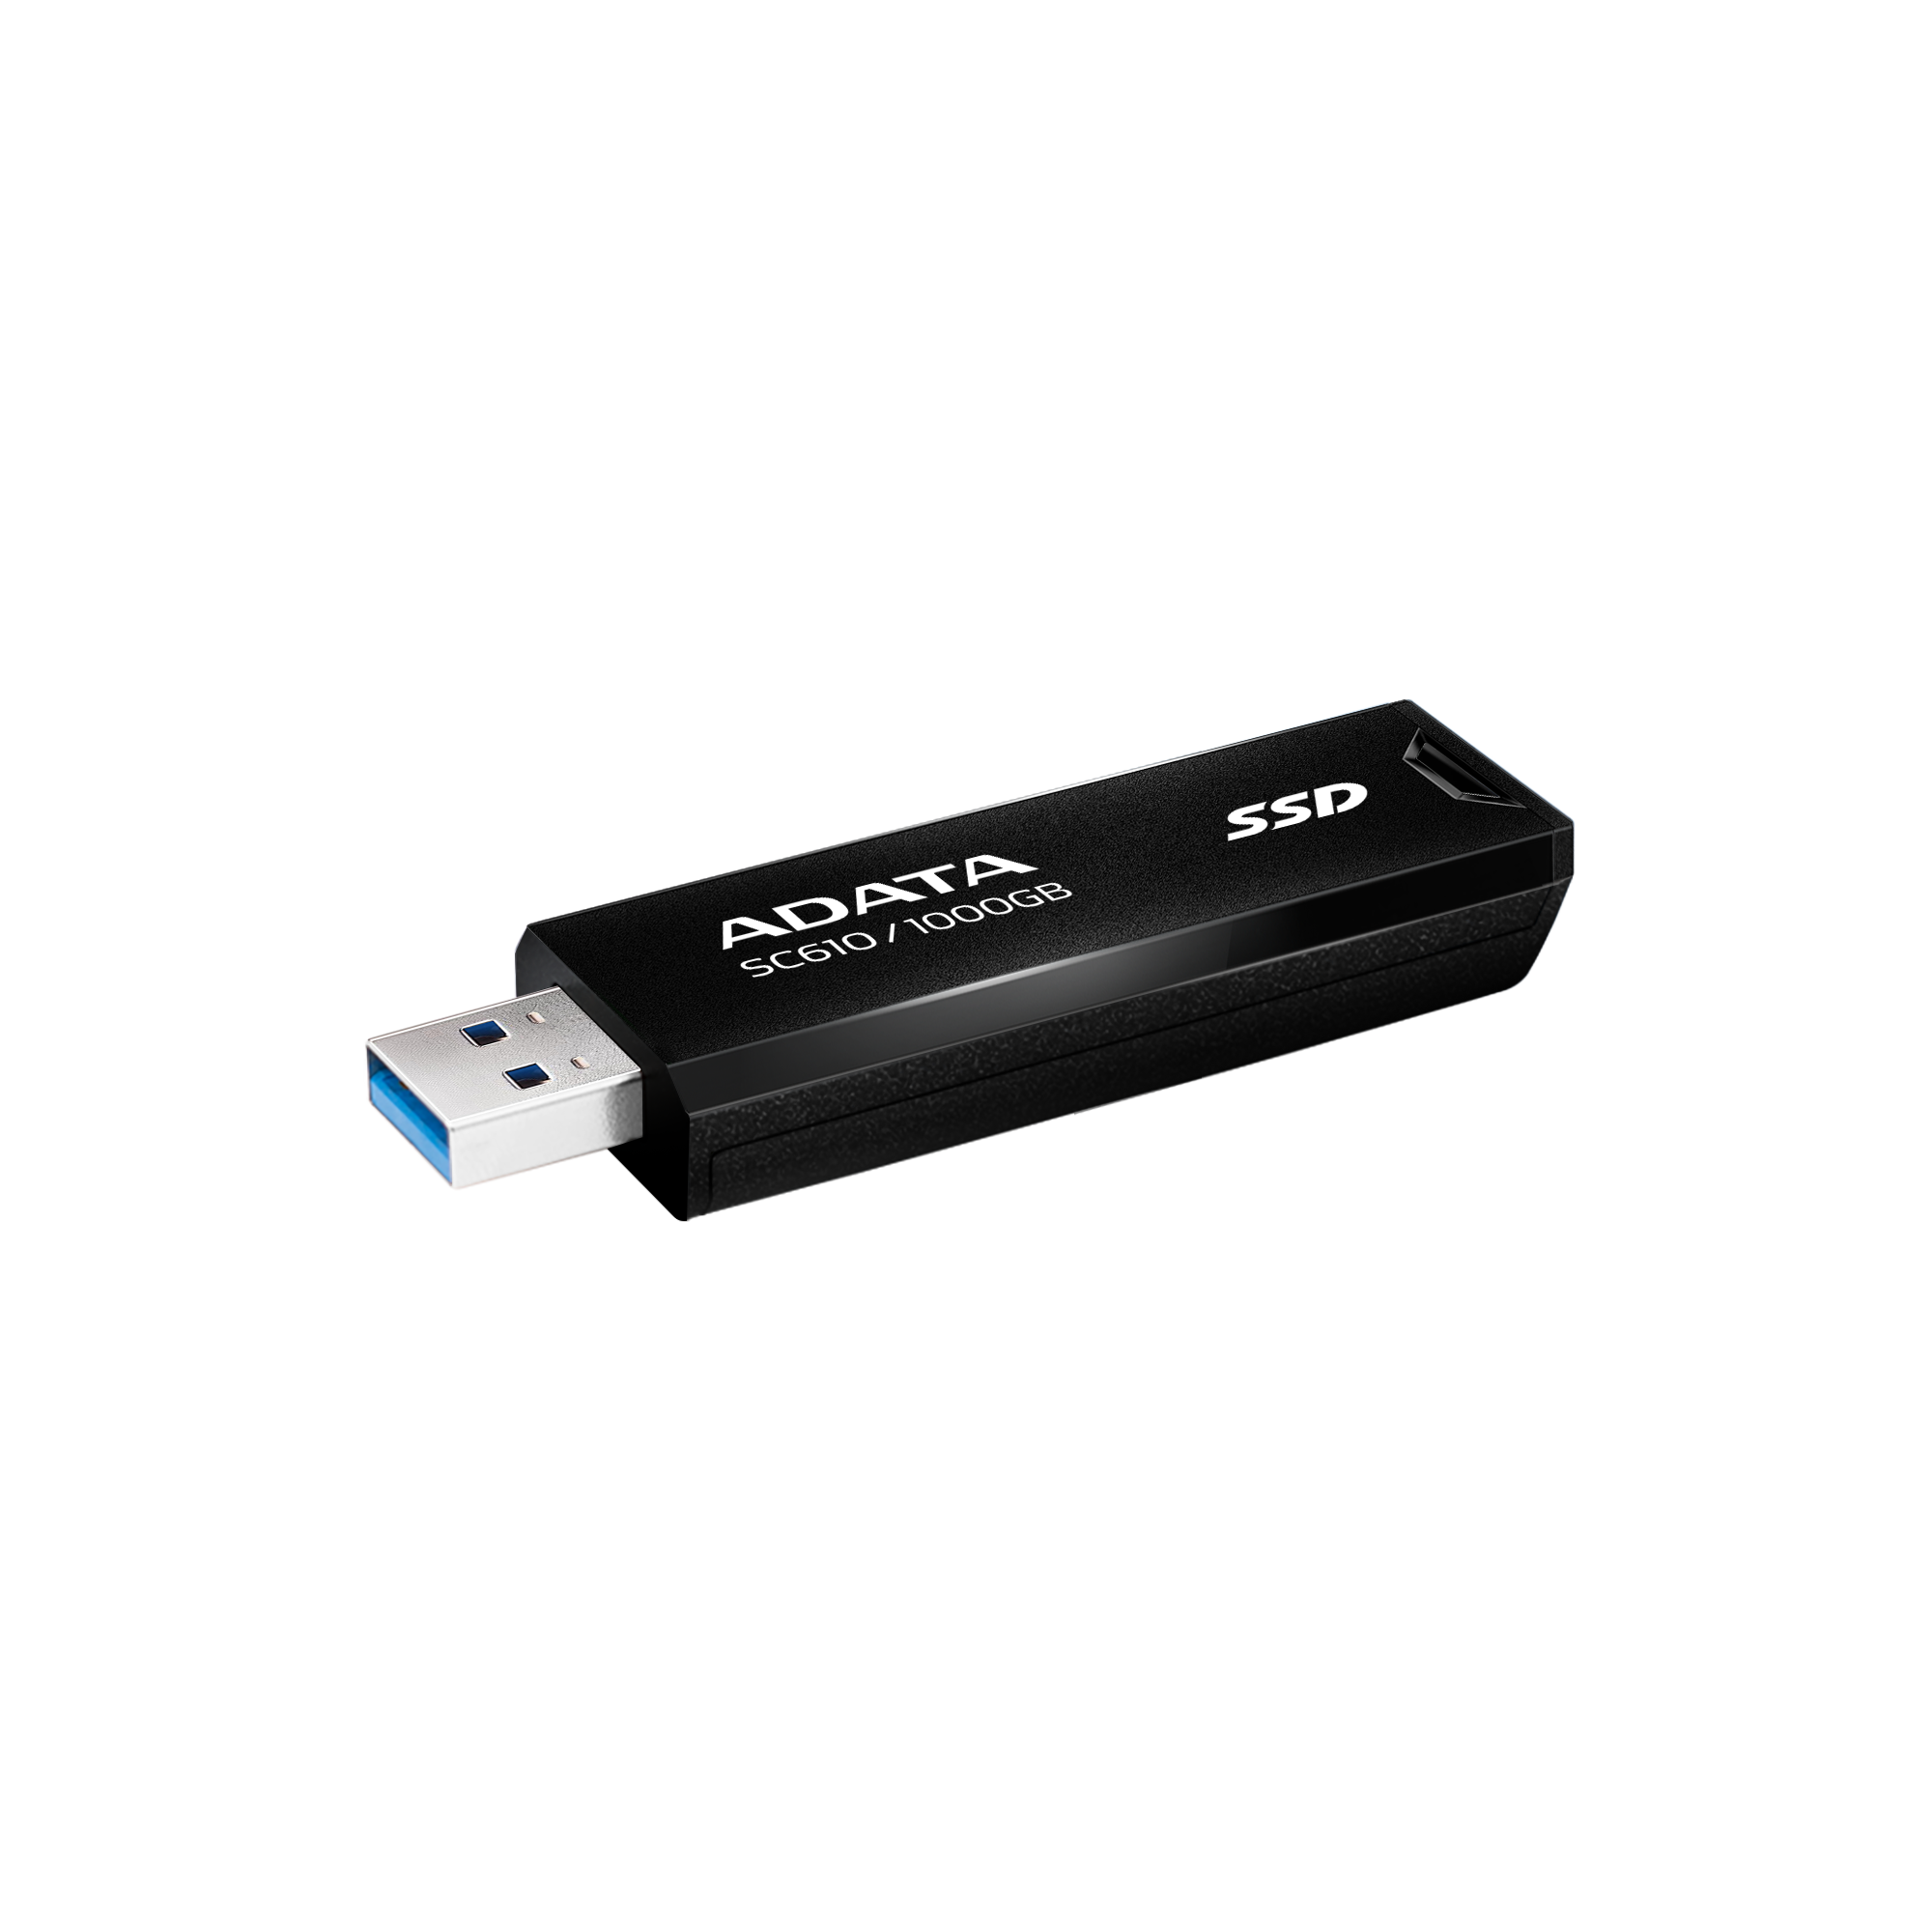 Consumer Storage - SSD, Memory Card, USB Flash Drive